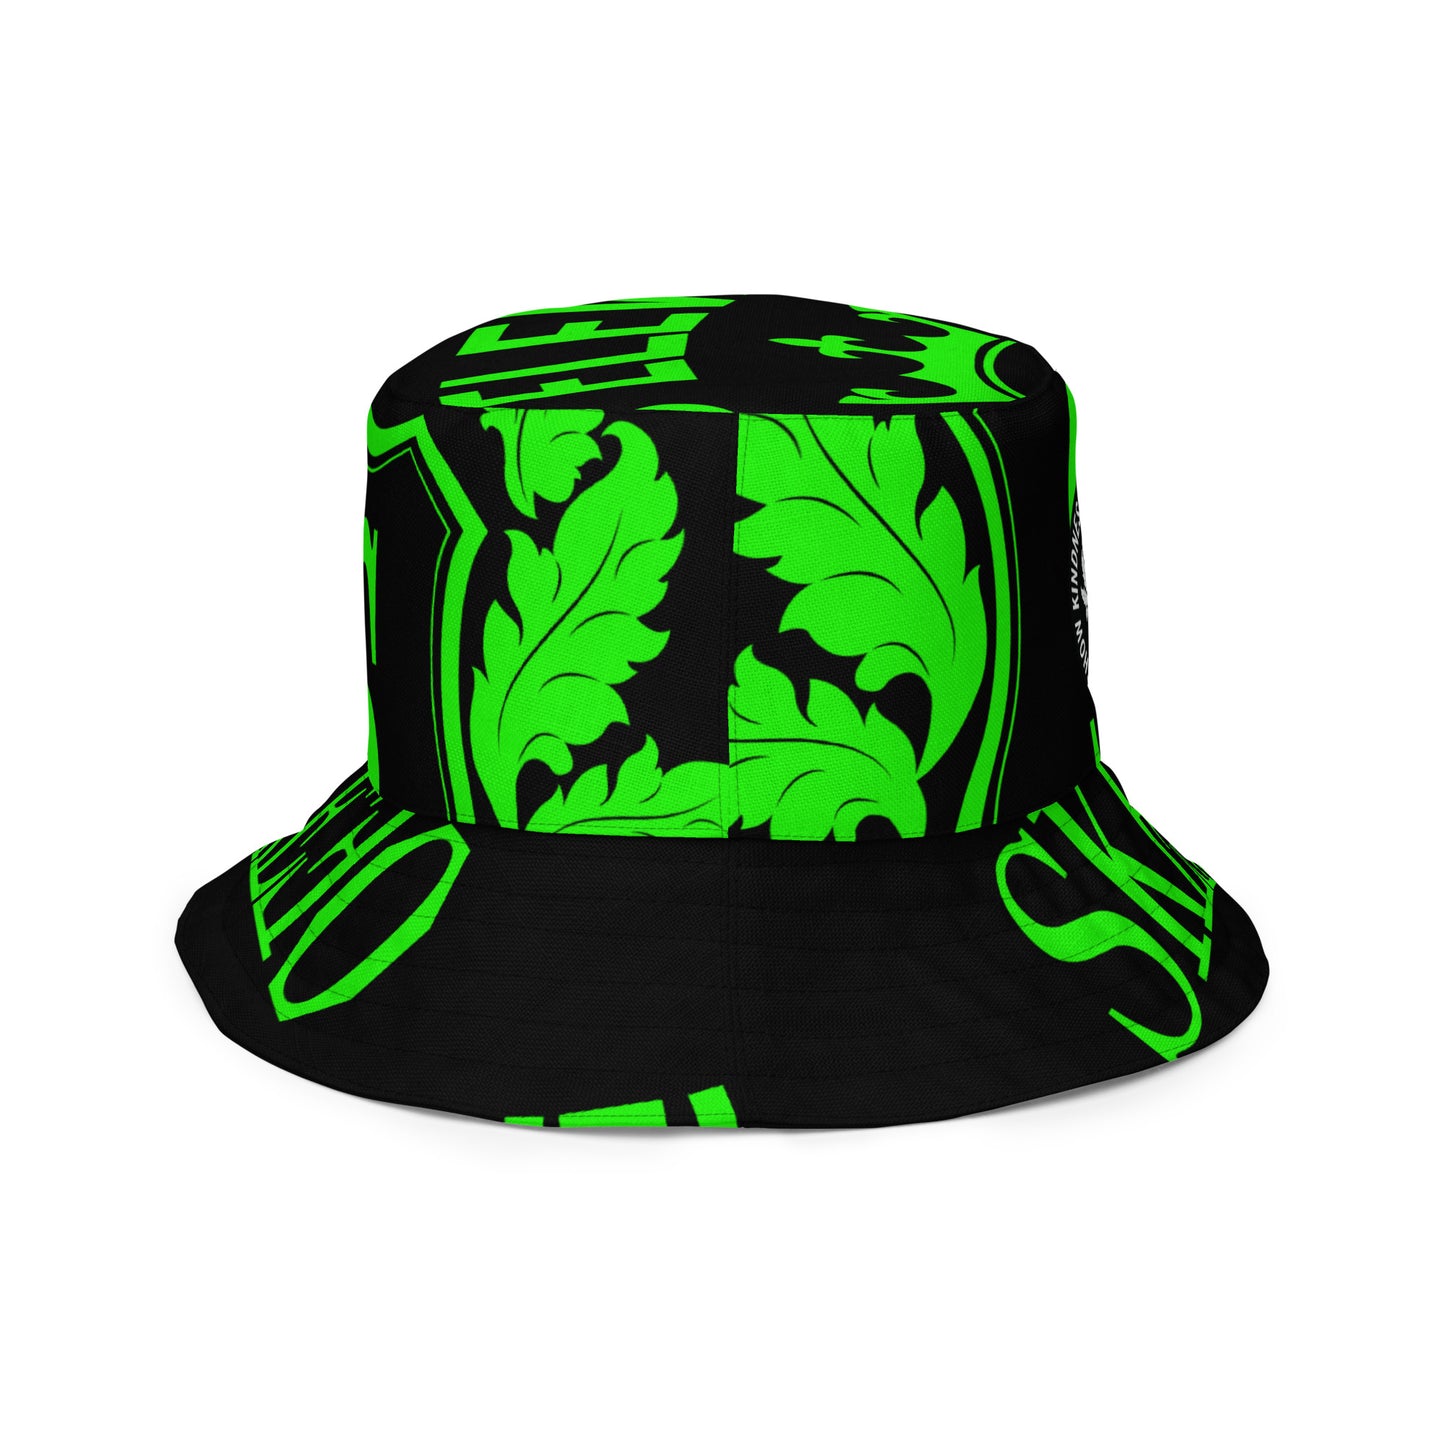 1 ASK Green/Black Gobblin Reversible bucket hat